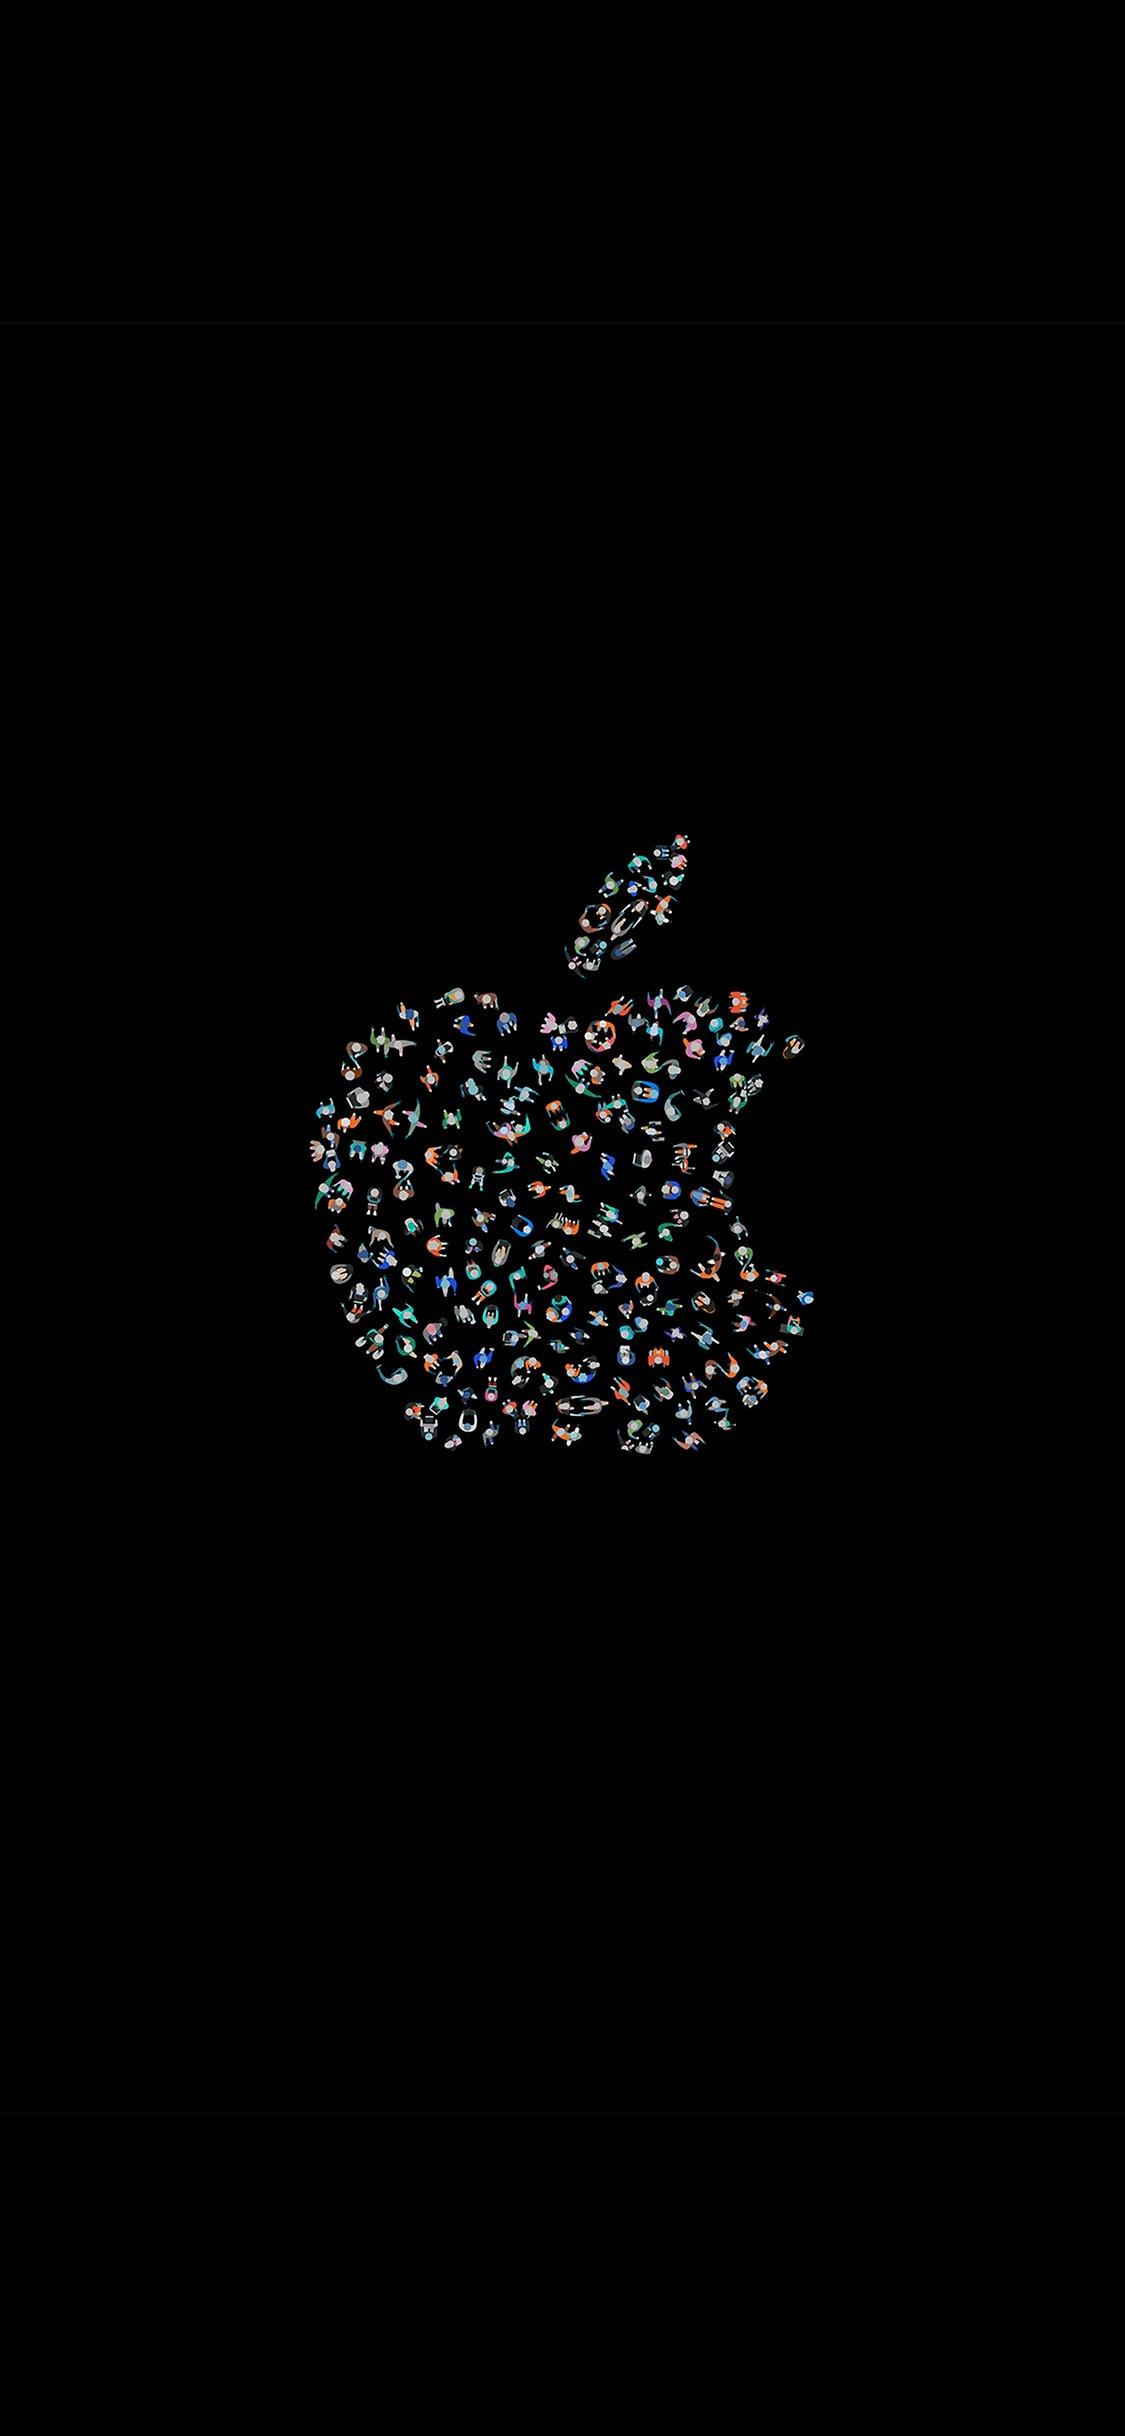 iPhone wallpaper. wwdc apple logo